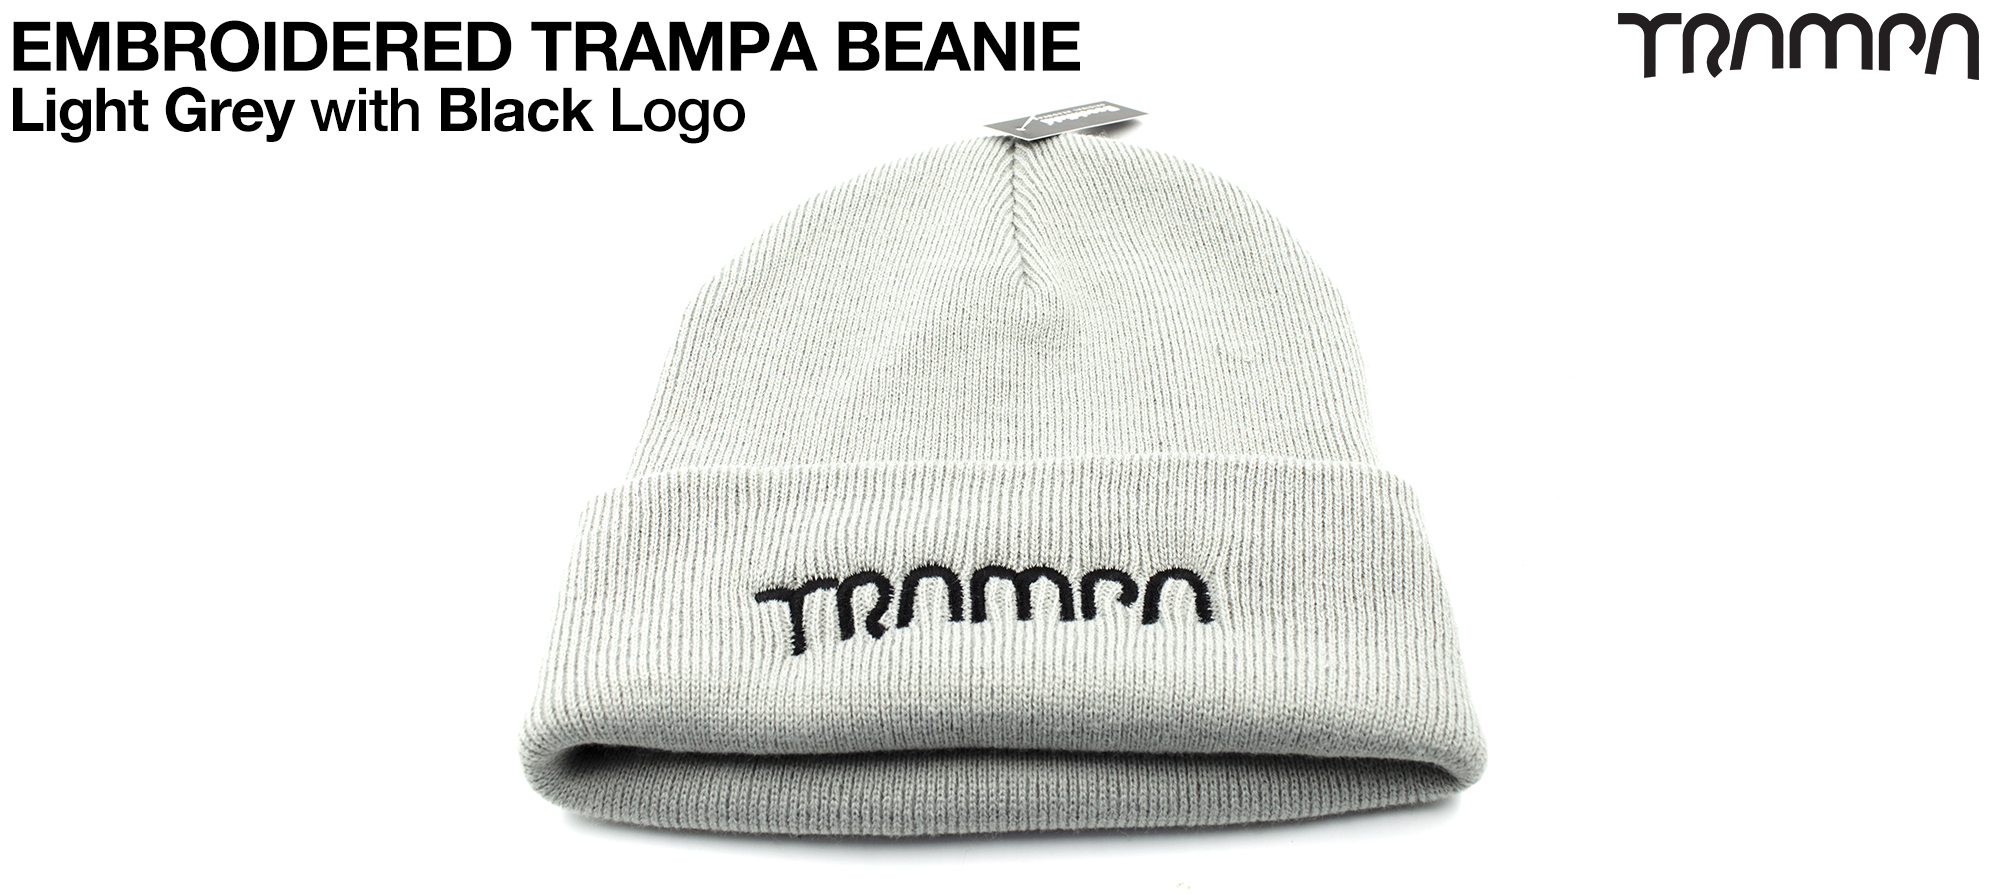 Marl GREY Beanie with Black TRAMPA logo